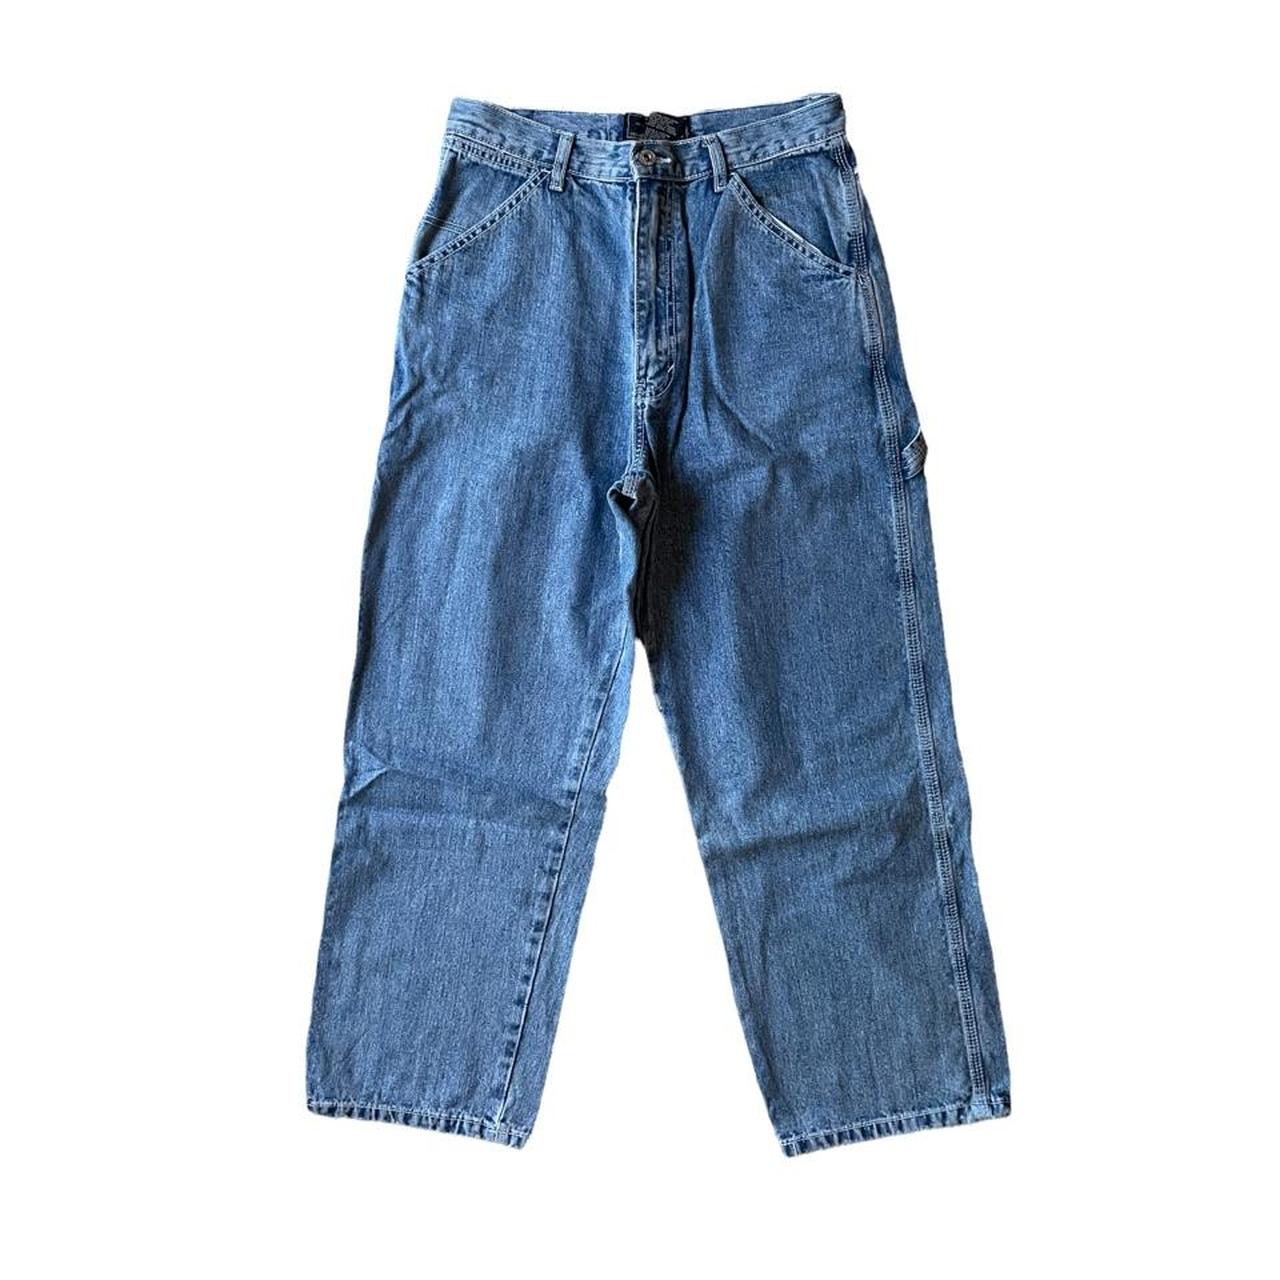 Vintage Route 66 carpenter jeans. So cute and a... - Depop